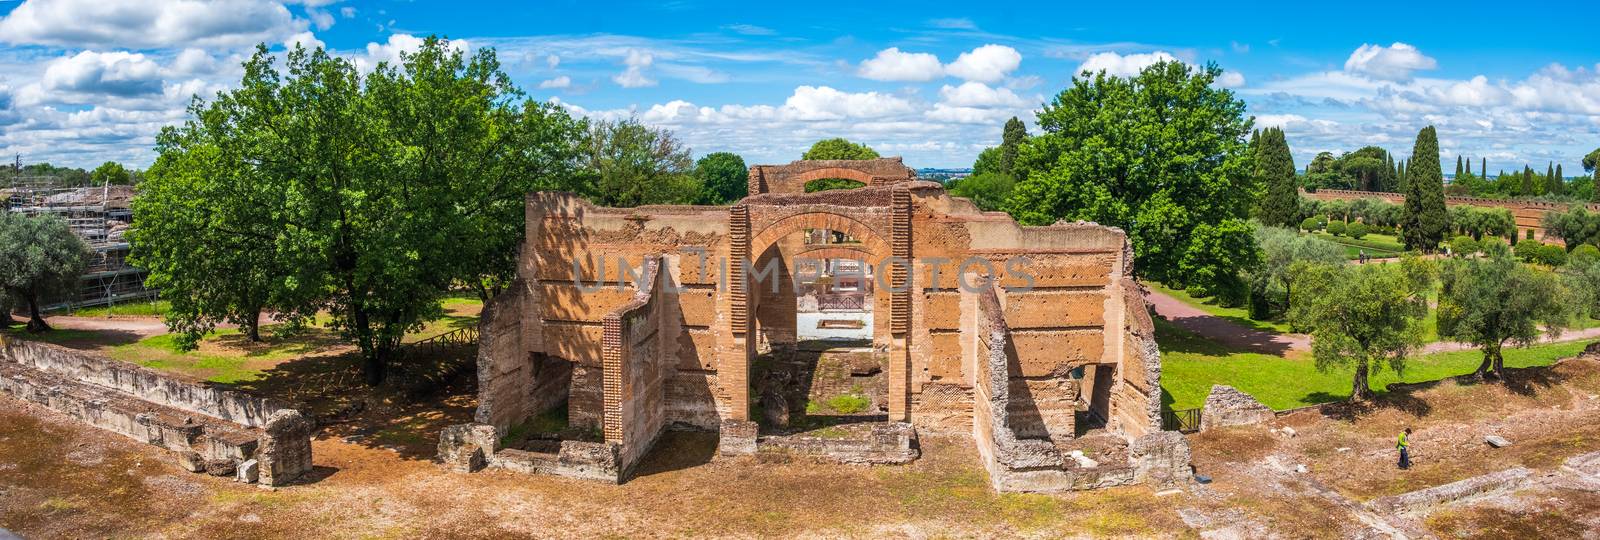 Tivoli - Villa Adriana cultural Rome tour- archaeological landmark in Italy panoramic horizontal of Three Exedras building by LucaLorenzelli